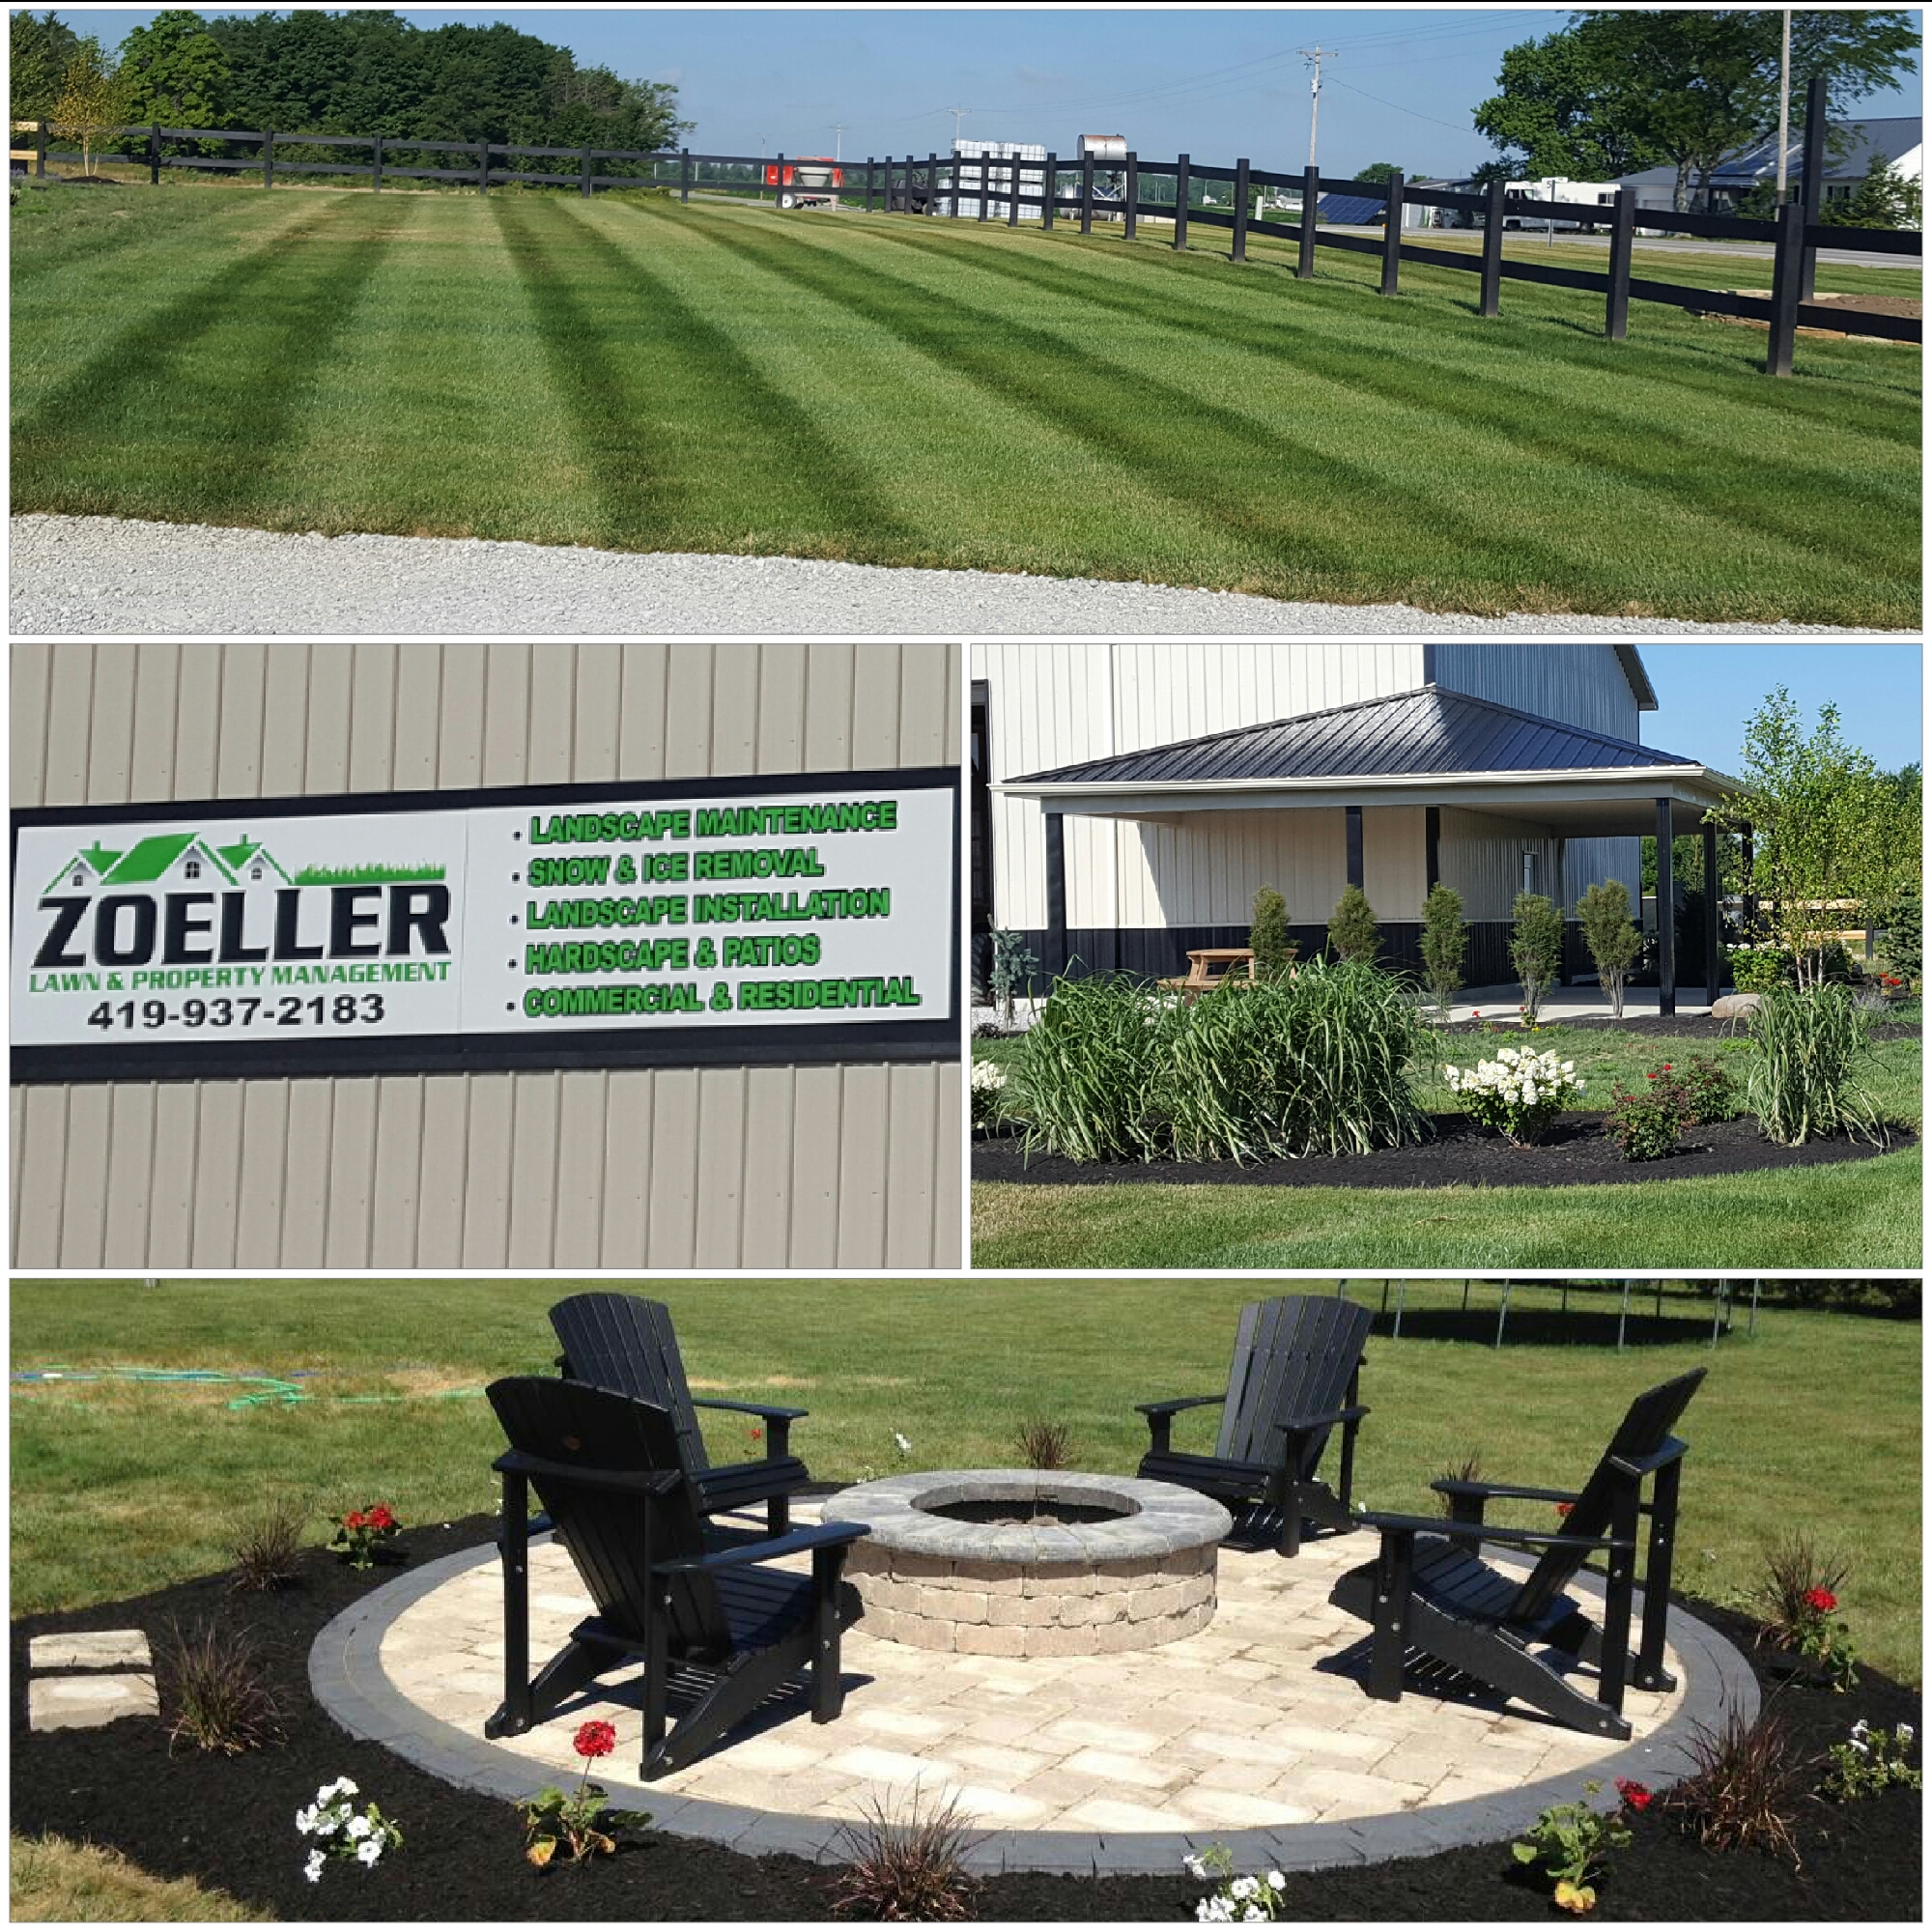 Zoeller Lawn Care & Property Management